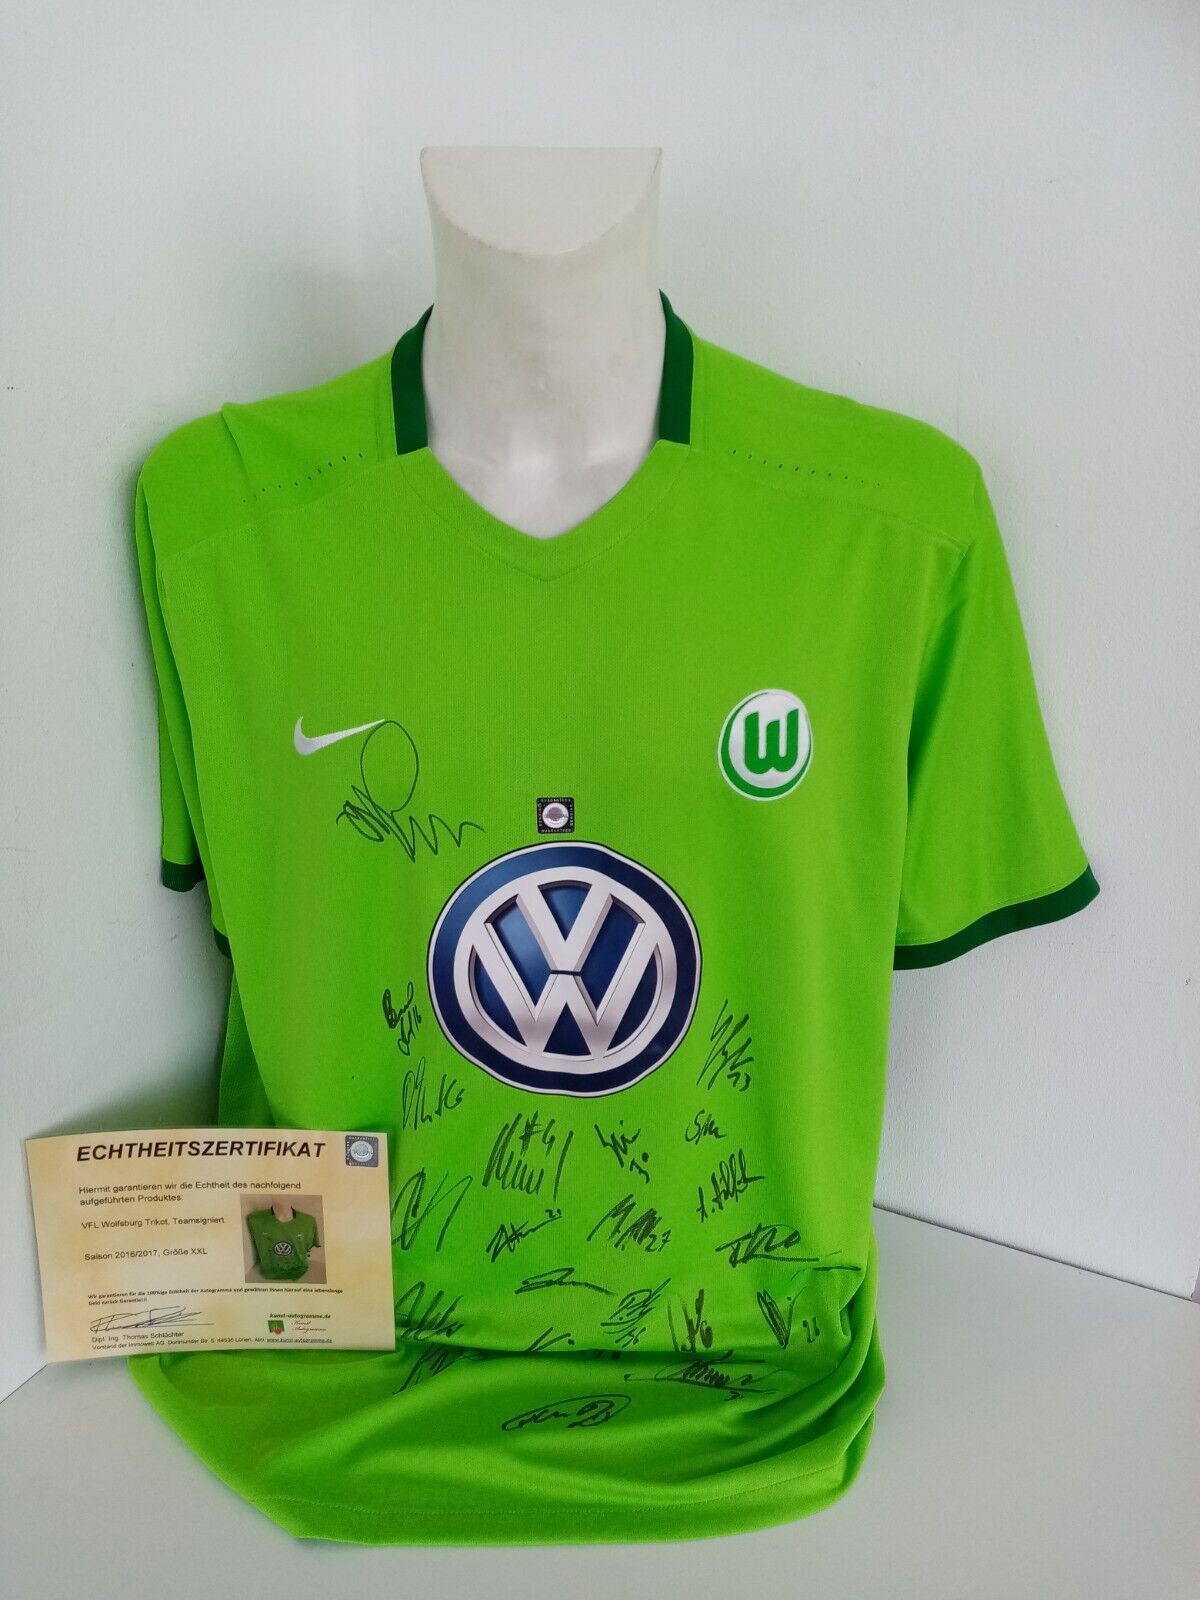 VFL Wolfsburg Trikot 16/17 Teamsigniert Autogramm Fußball Bundesliga Nike XXL